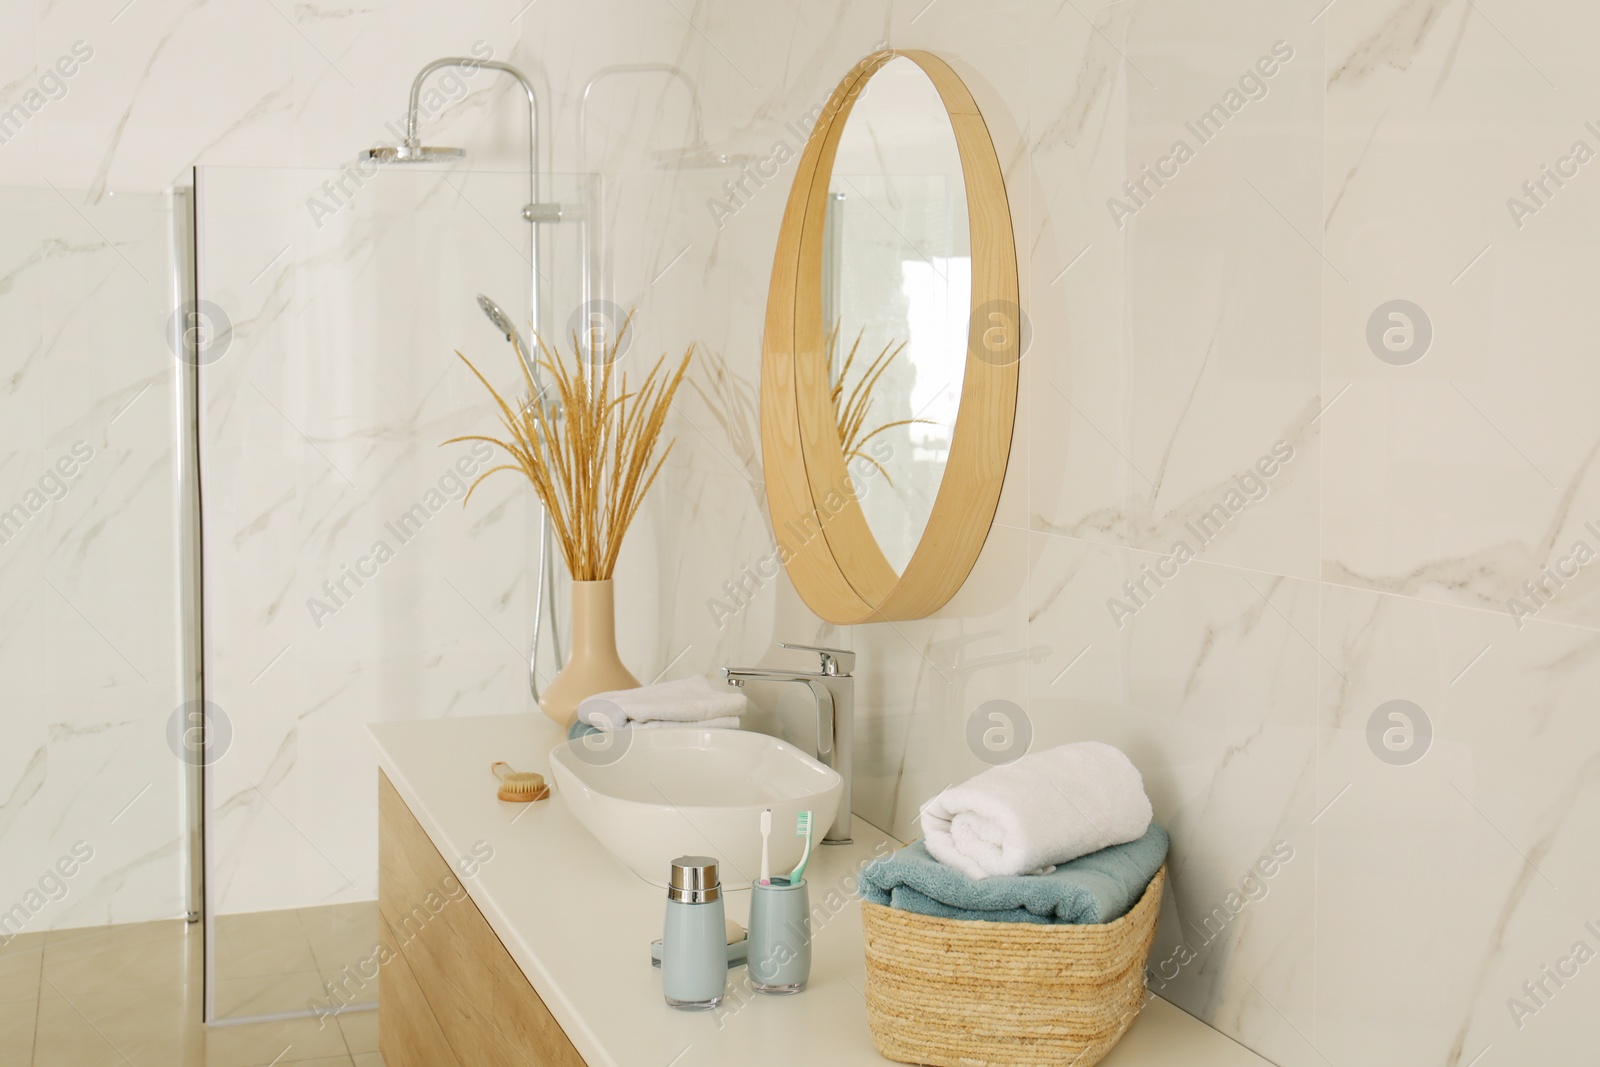 Photo of Round mirror over vessel sink in stylish bathroom interior